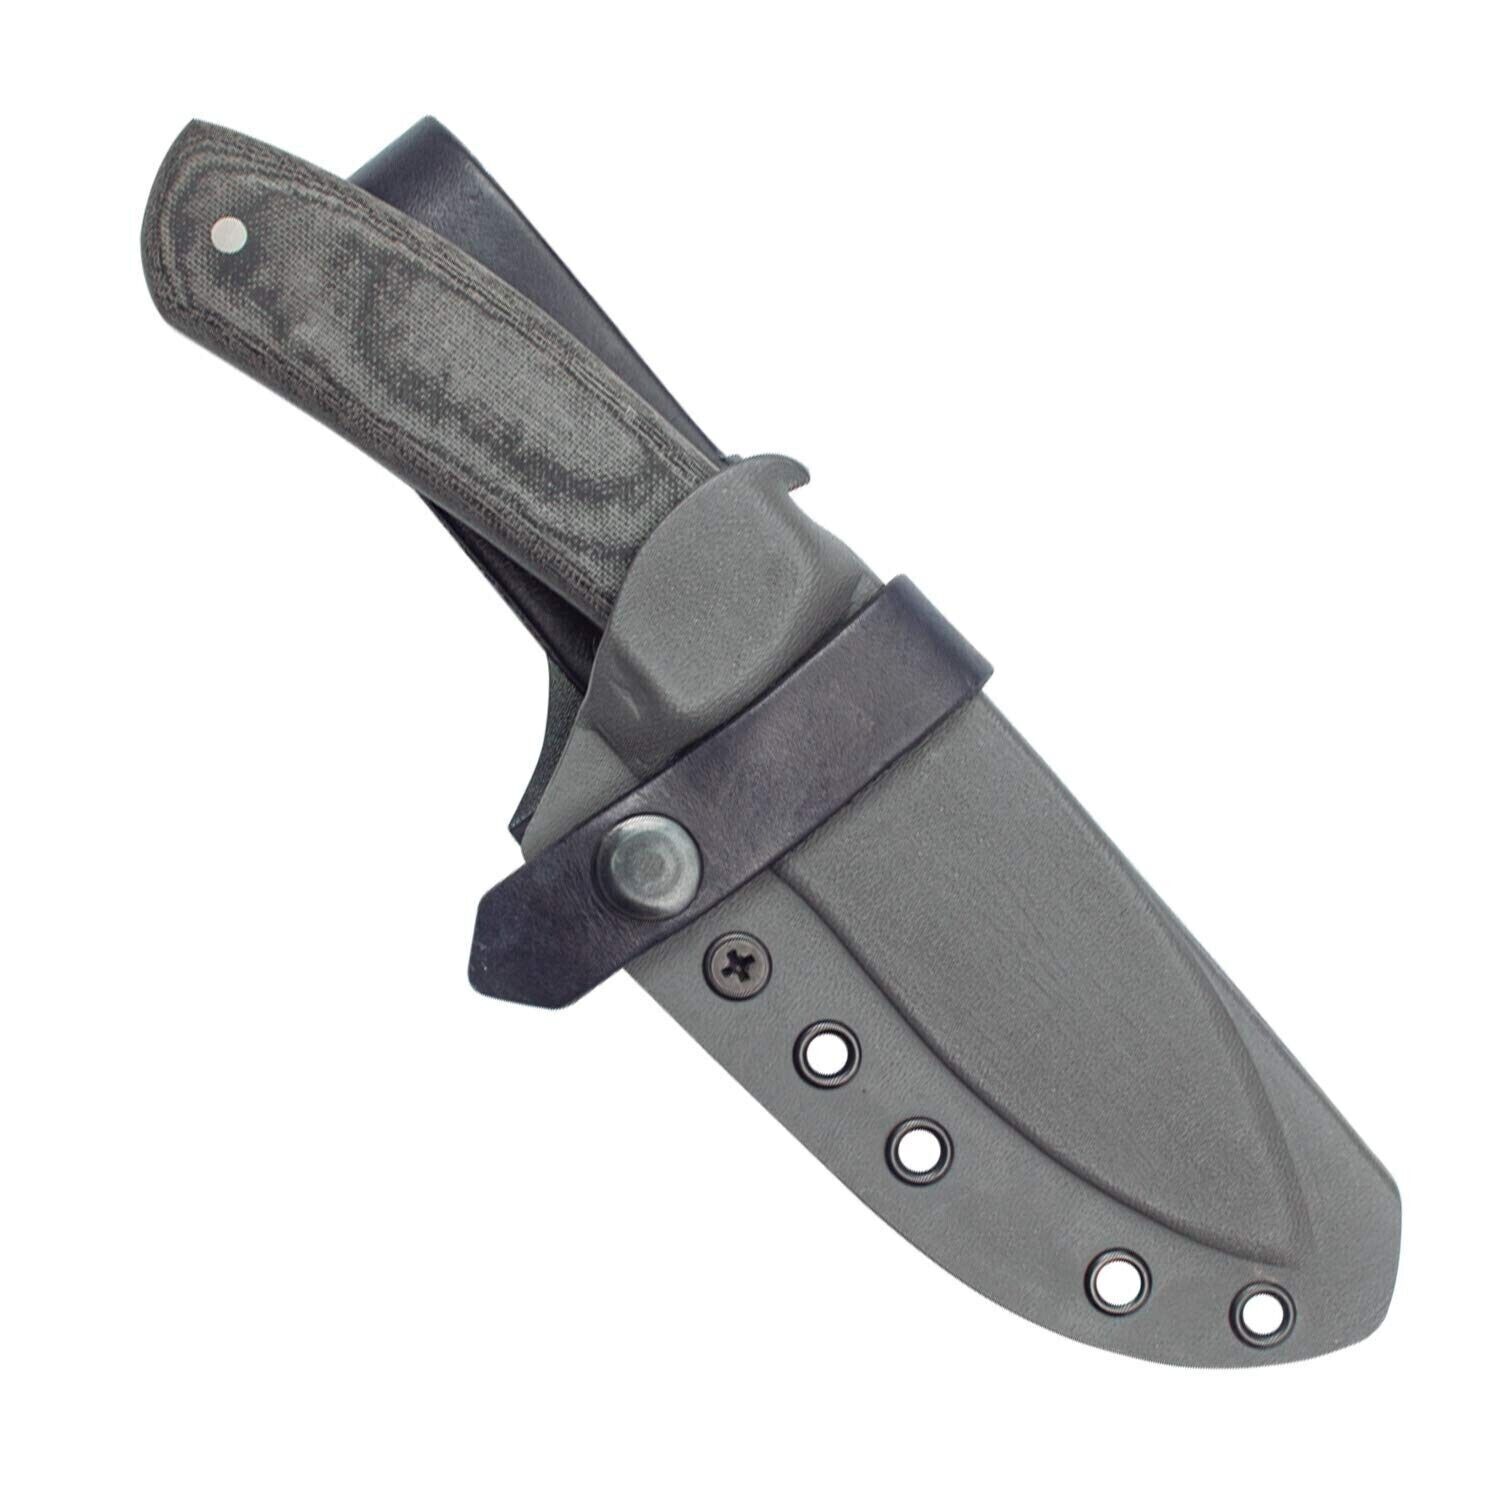 Condor Tool & Knife, Talon Knife, 1095 High Carbon Steel, 9 in Overall Length, 